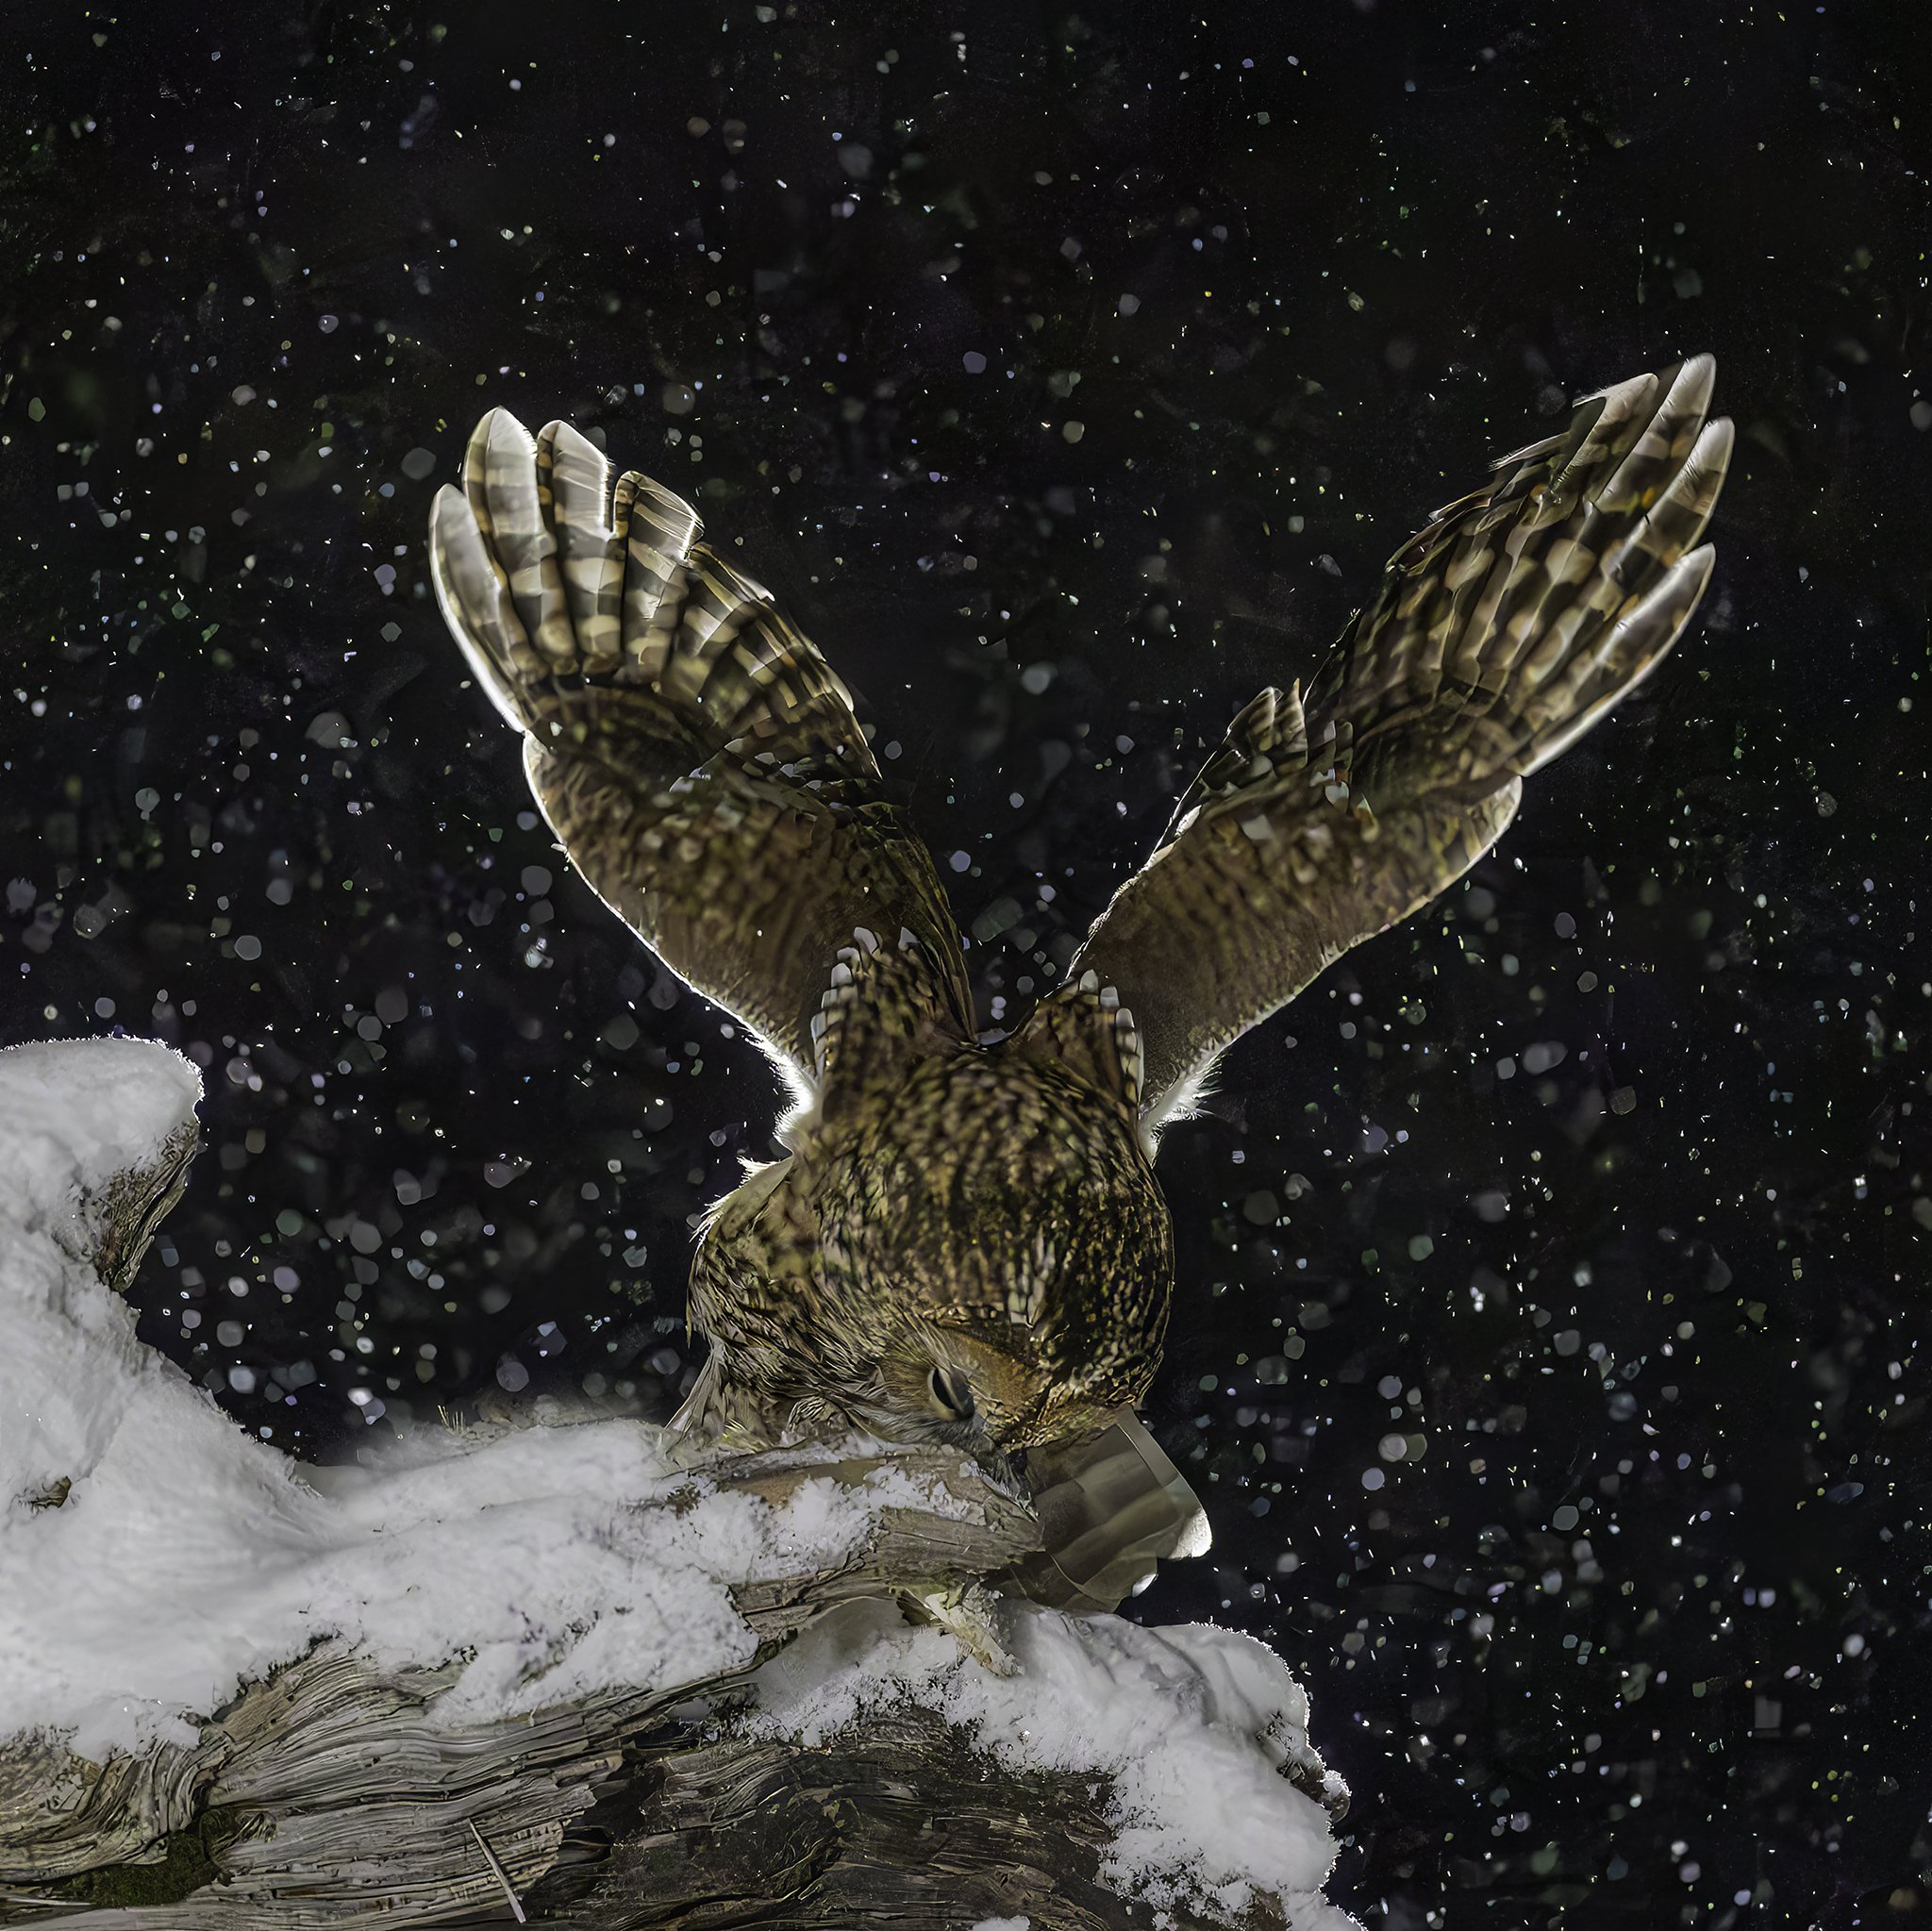 Tawny owl in winter wonderland 3